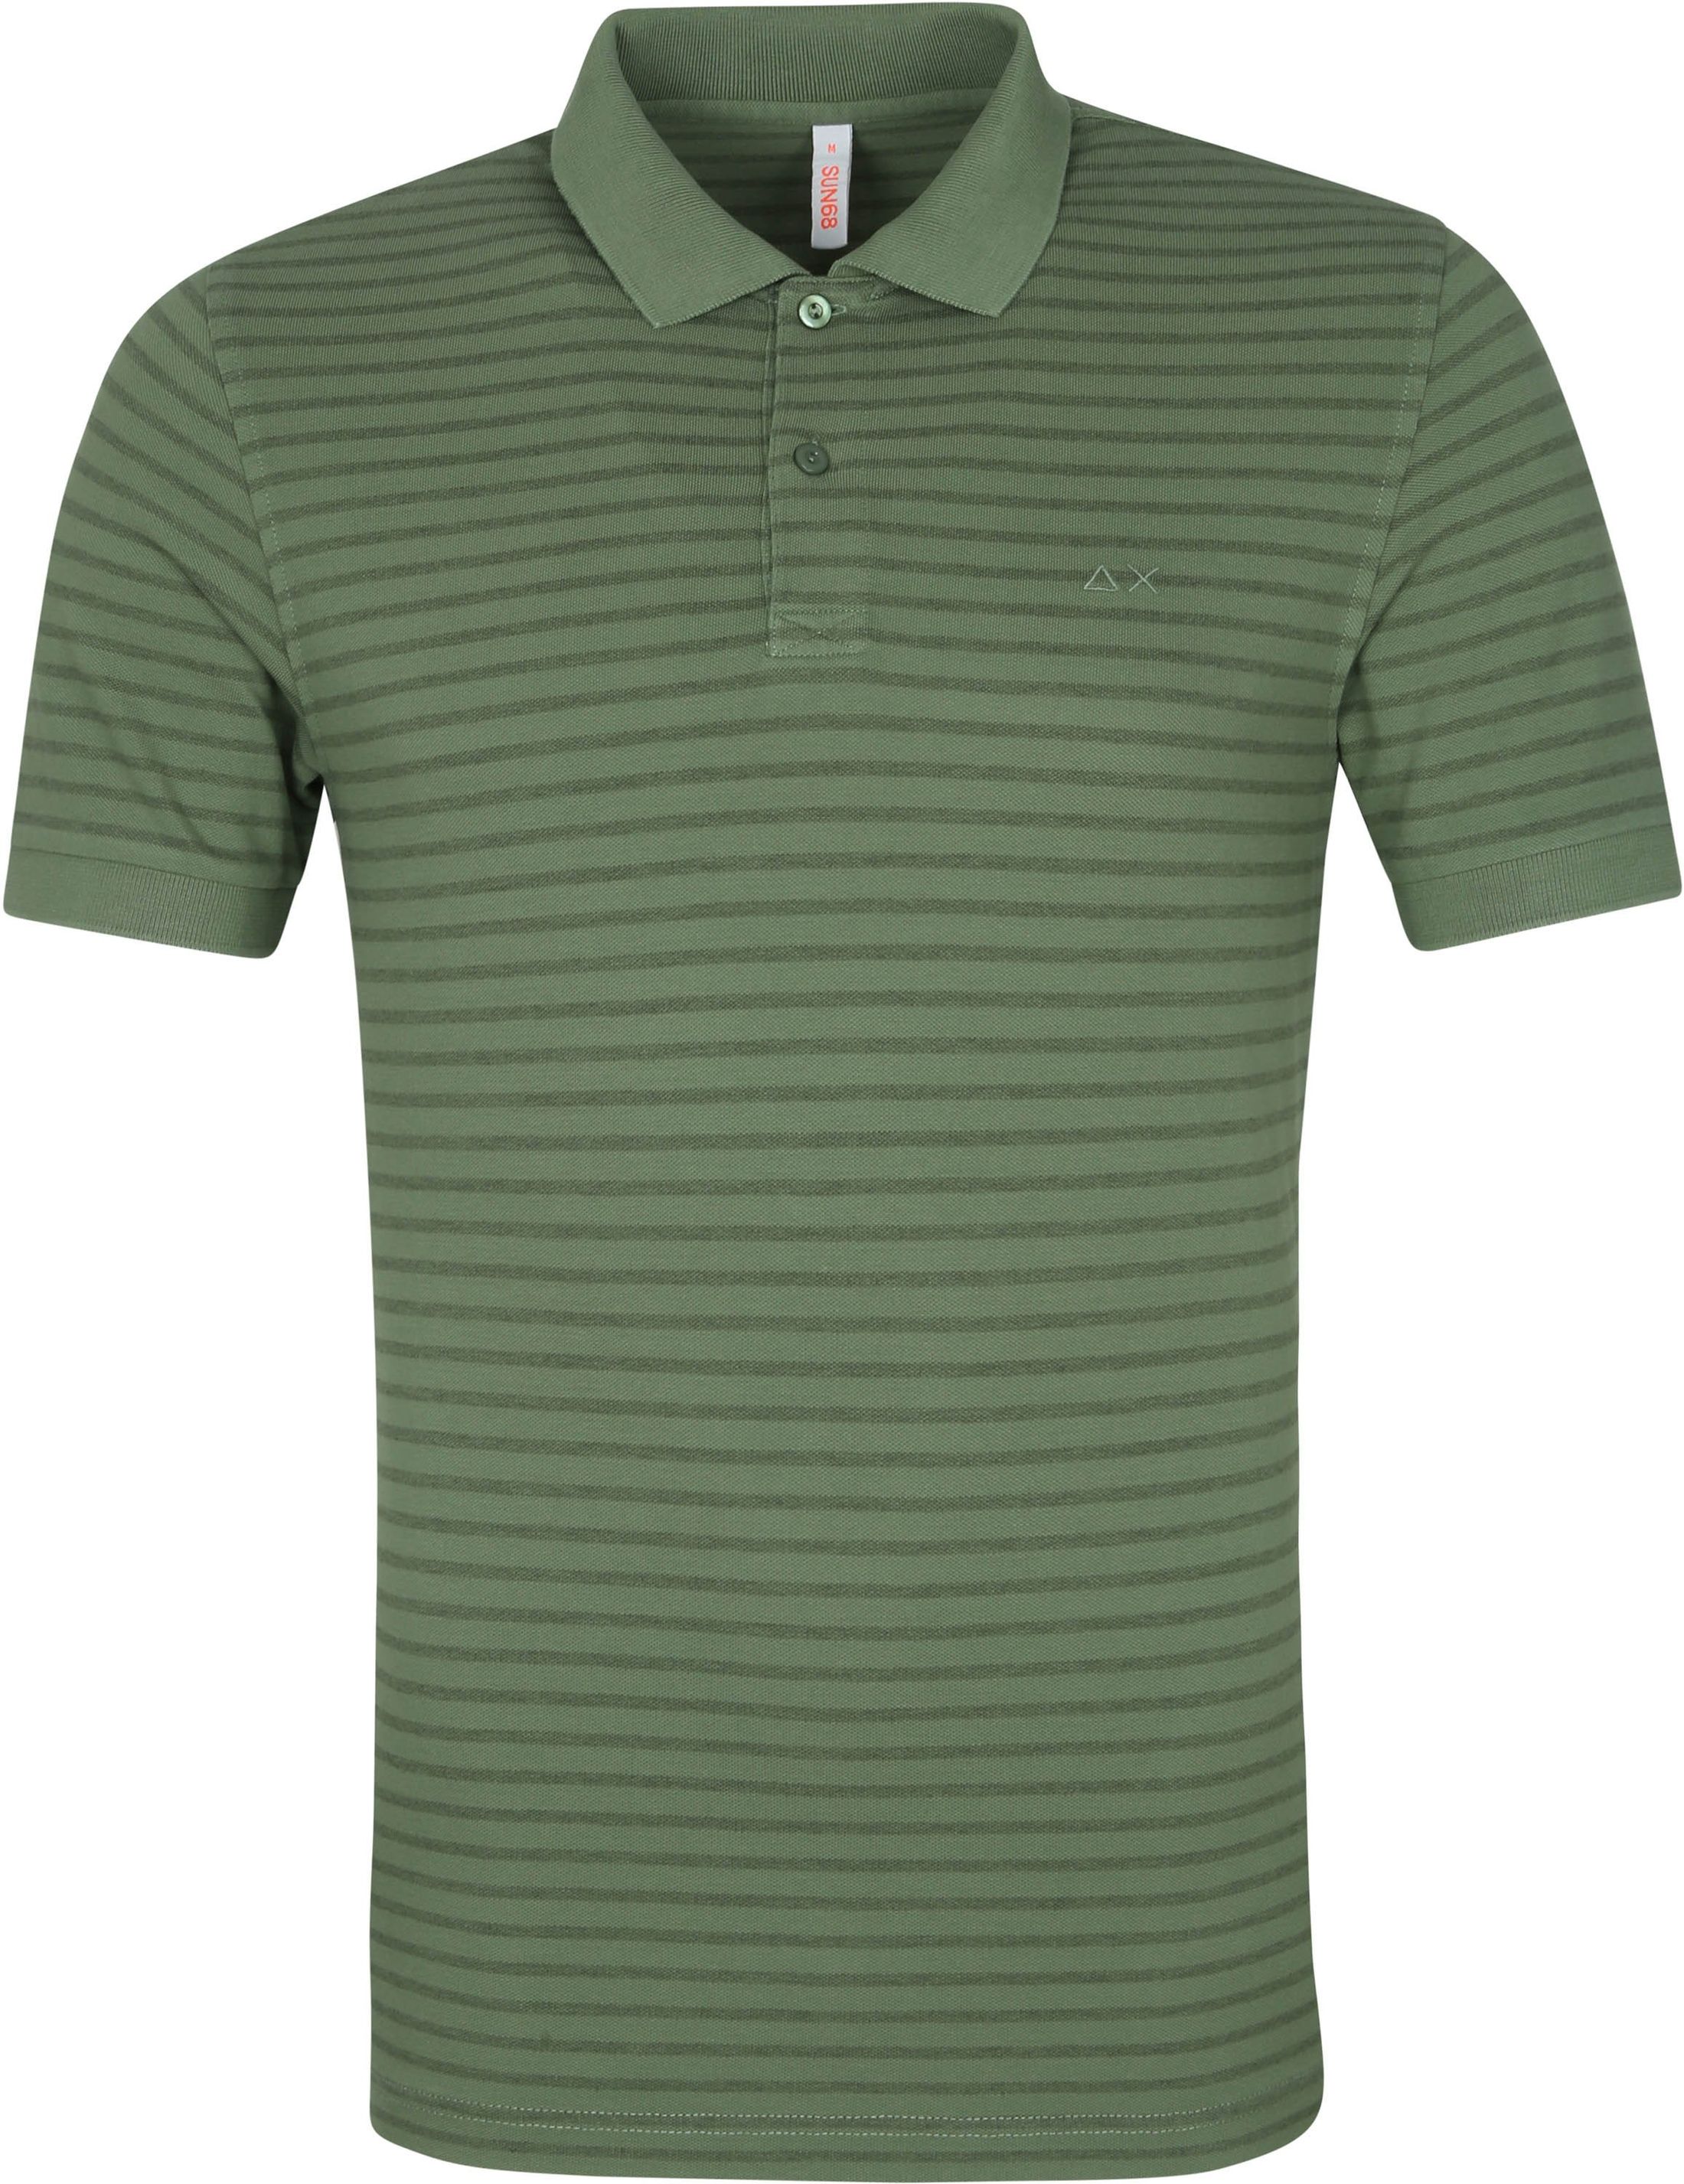 Sun68 Polo Shirt Dye Stripes Olive Dark Green Green size XL